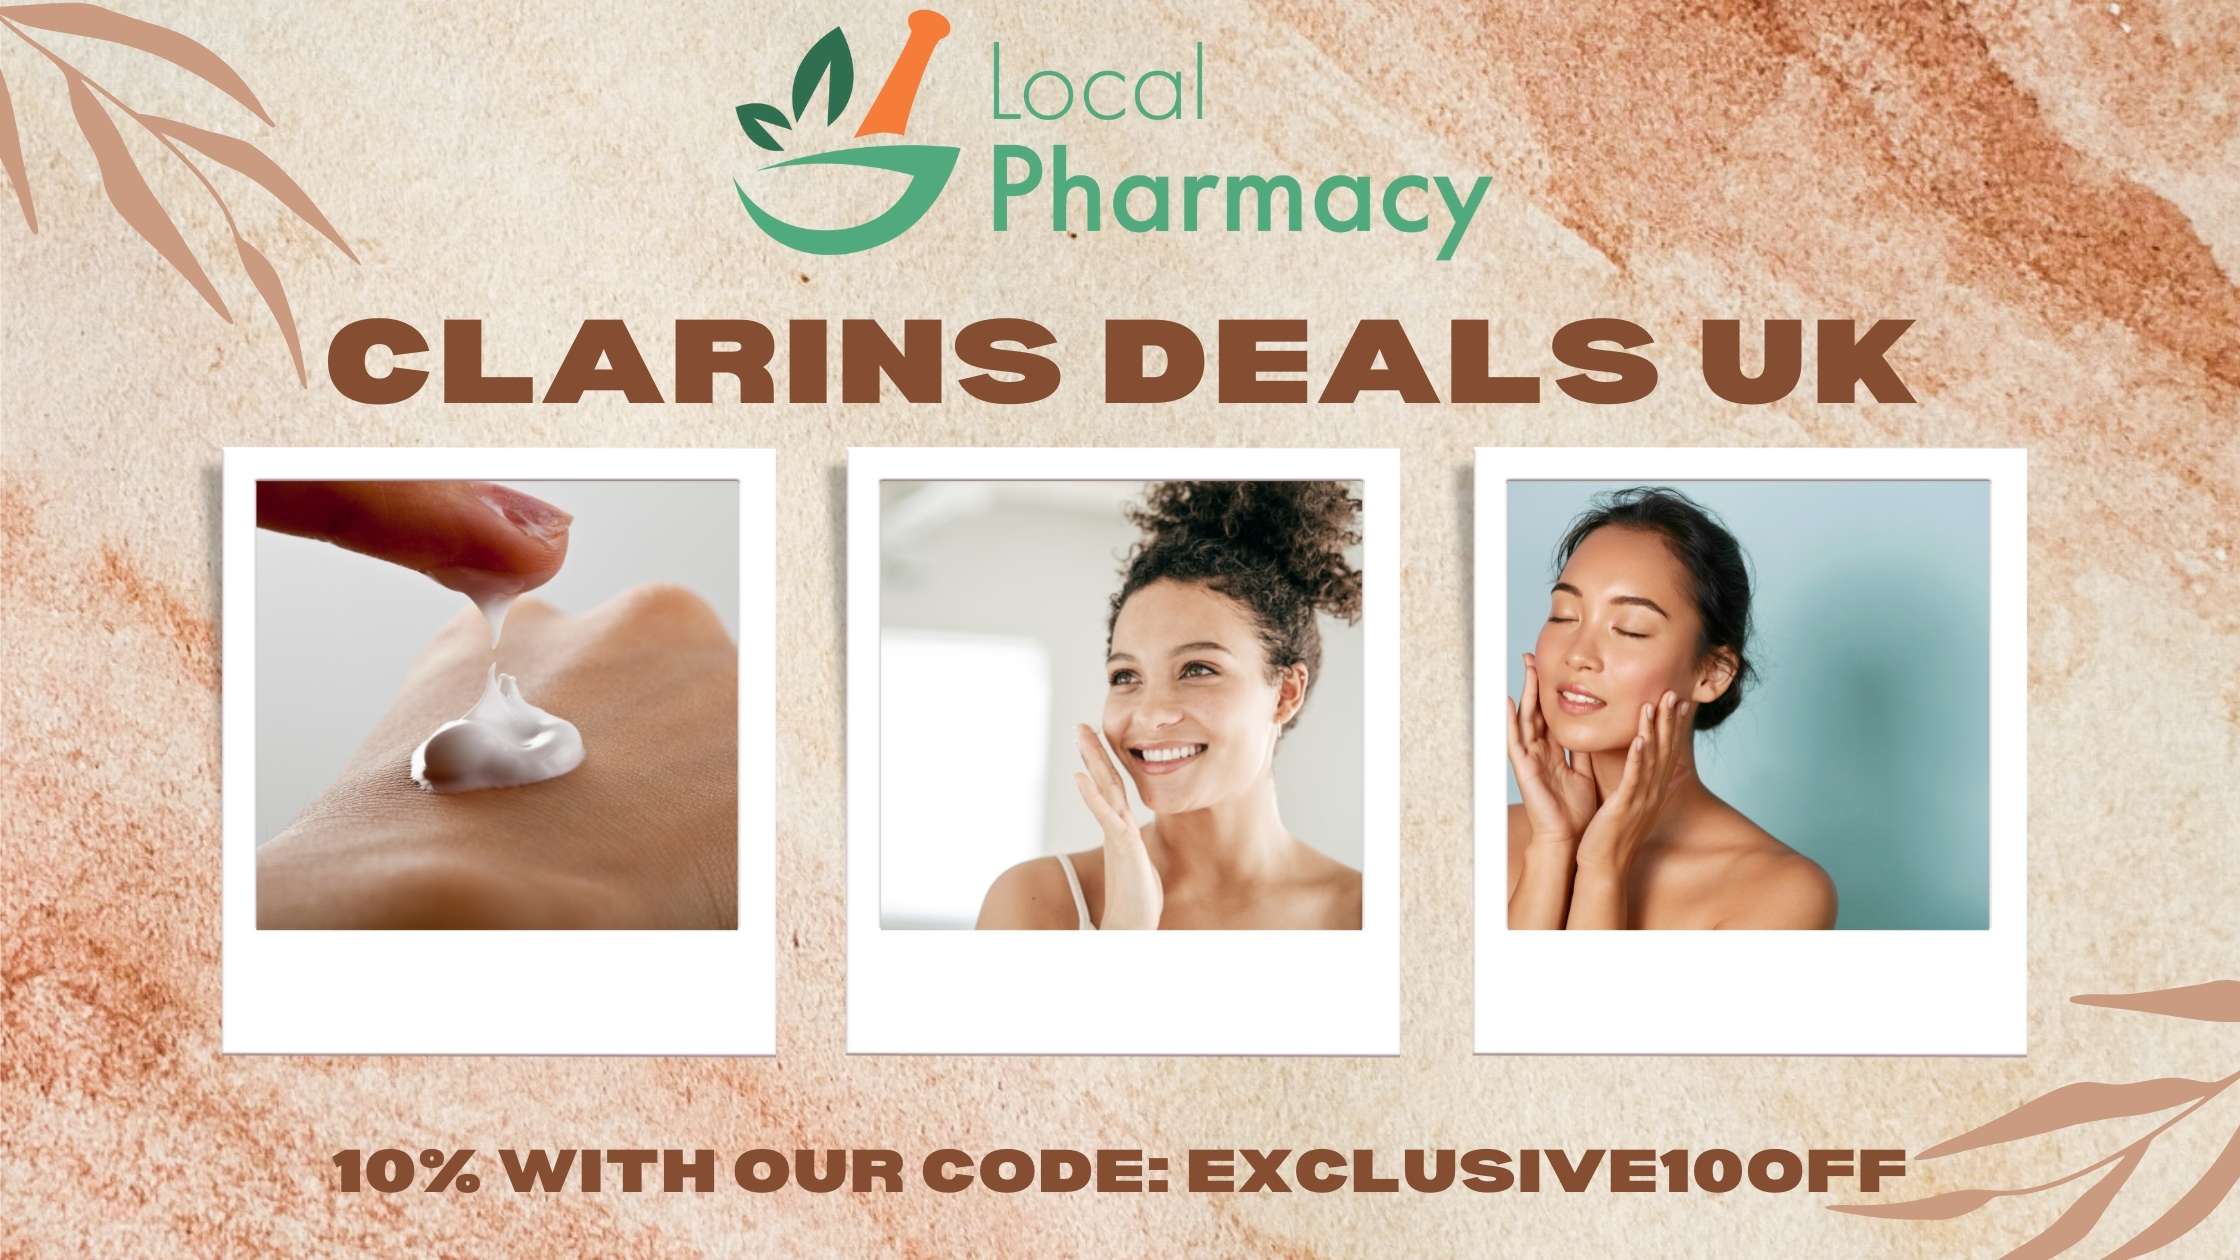 Clarins coupon code and deals uk